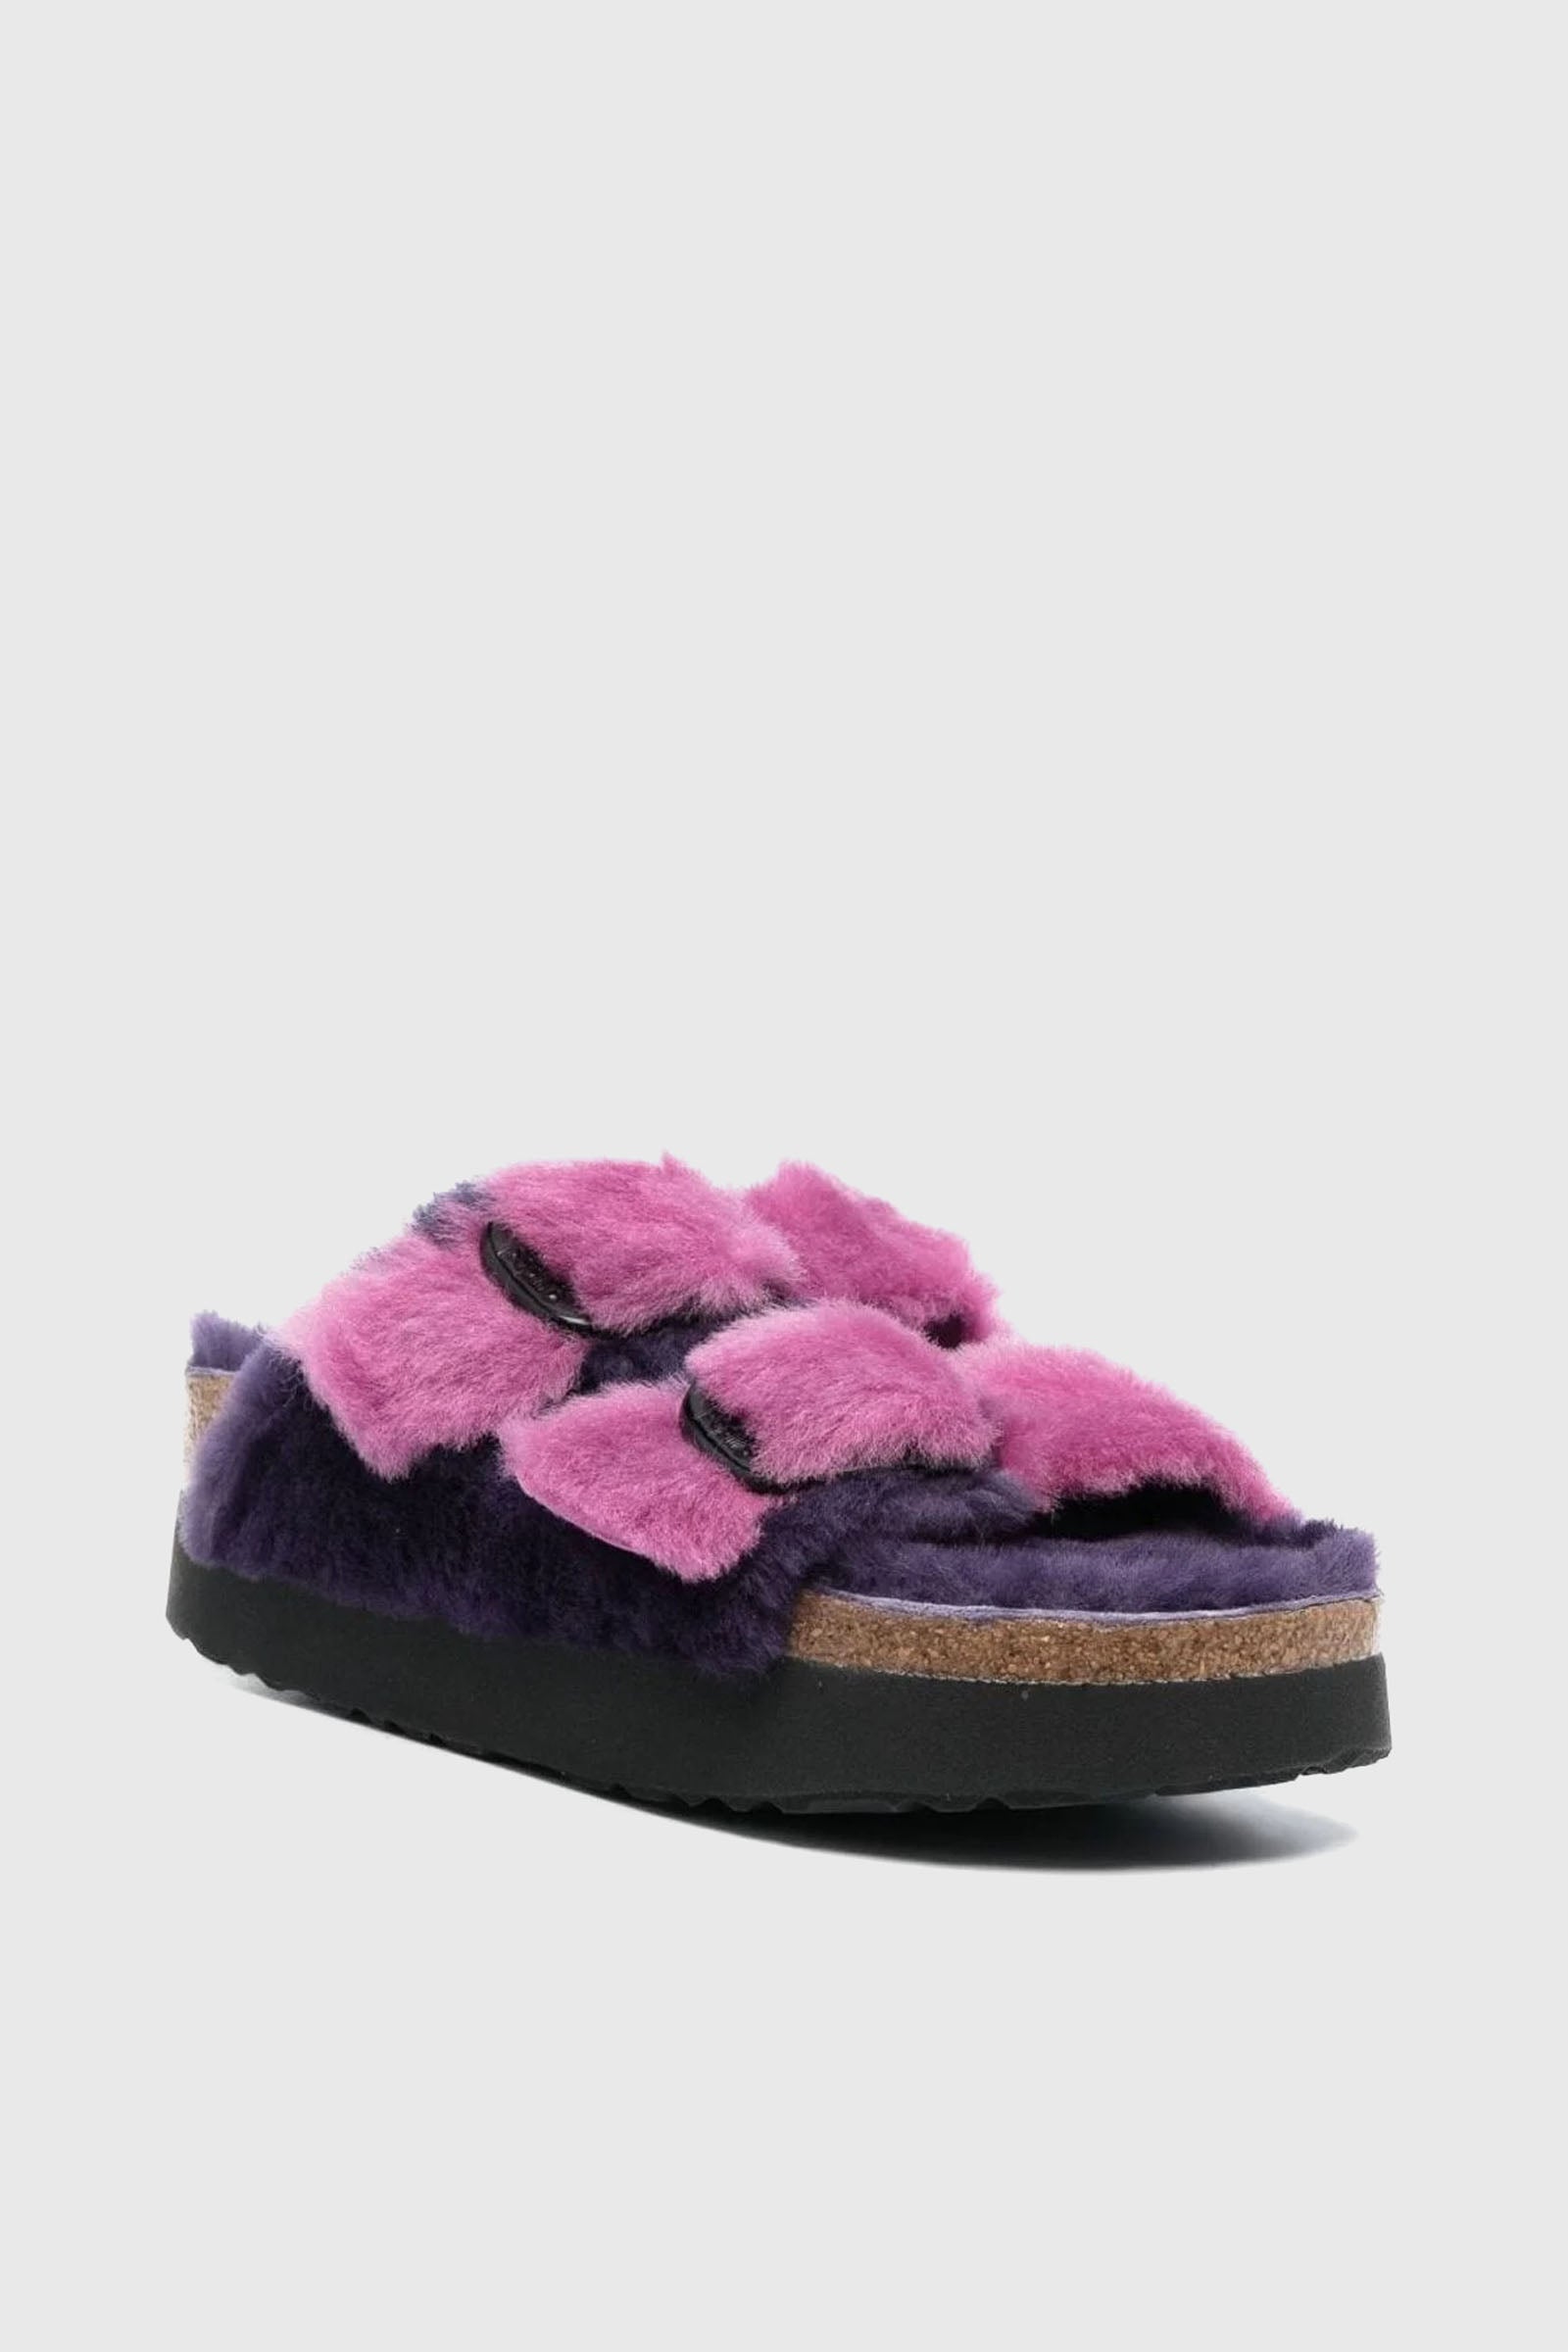 Birkenstock Arizona Sandal Big Buckle Leather/Lamb Fur Purple - 2